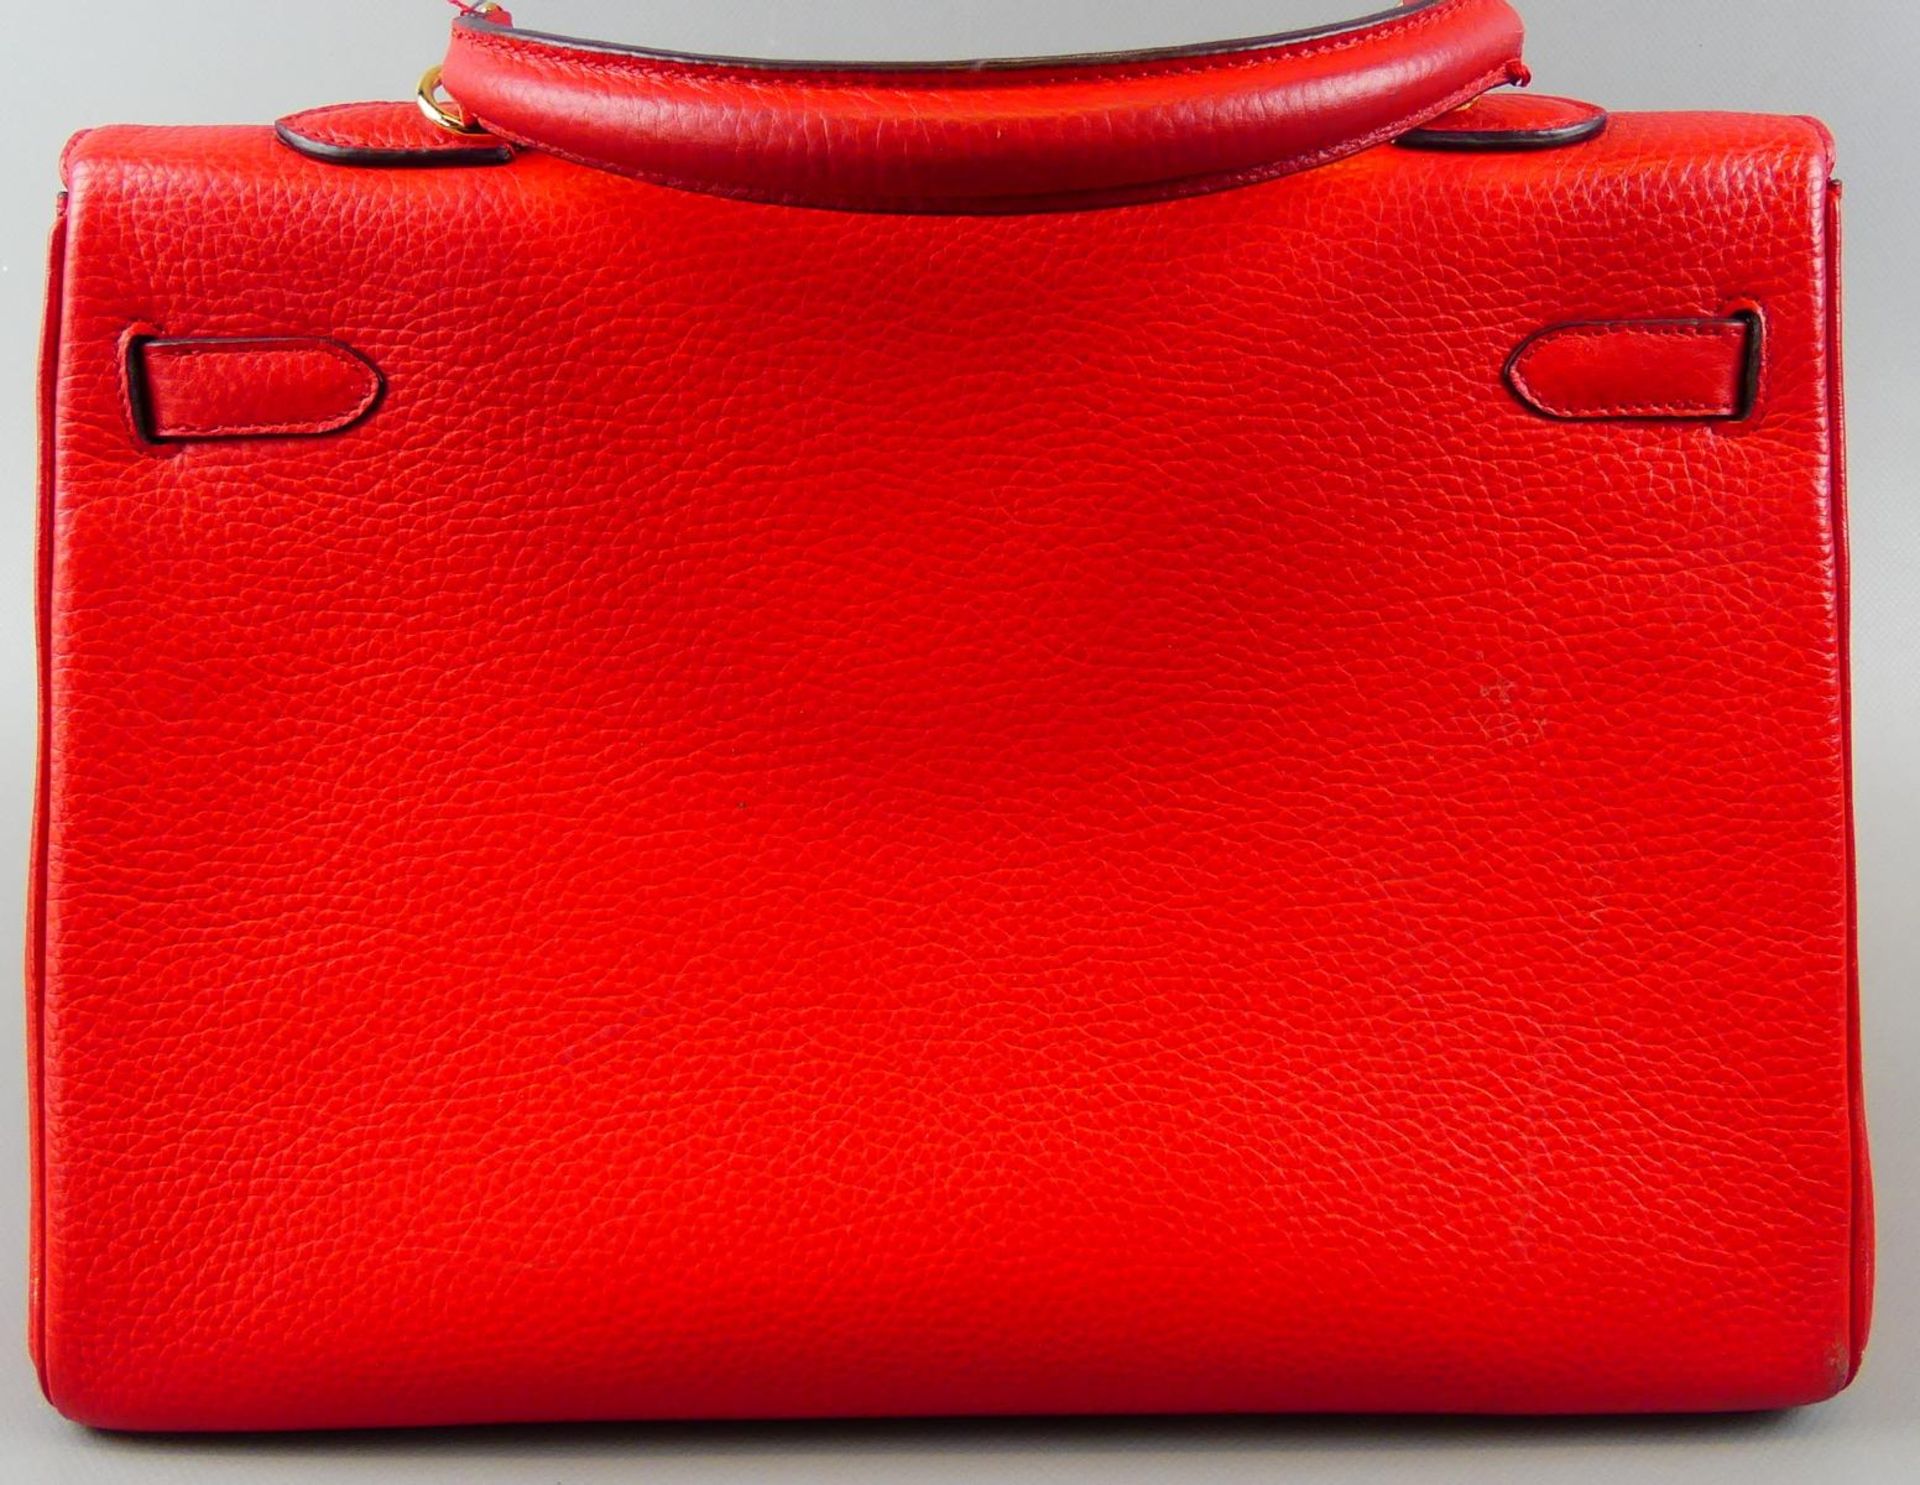 HERMÈS Handtasche "KELLY BAG 35", Koll. 2012, Modell Retourné, - Image 4 of 10